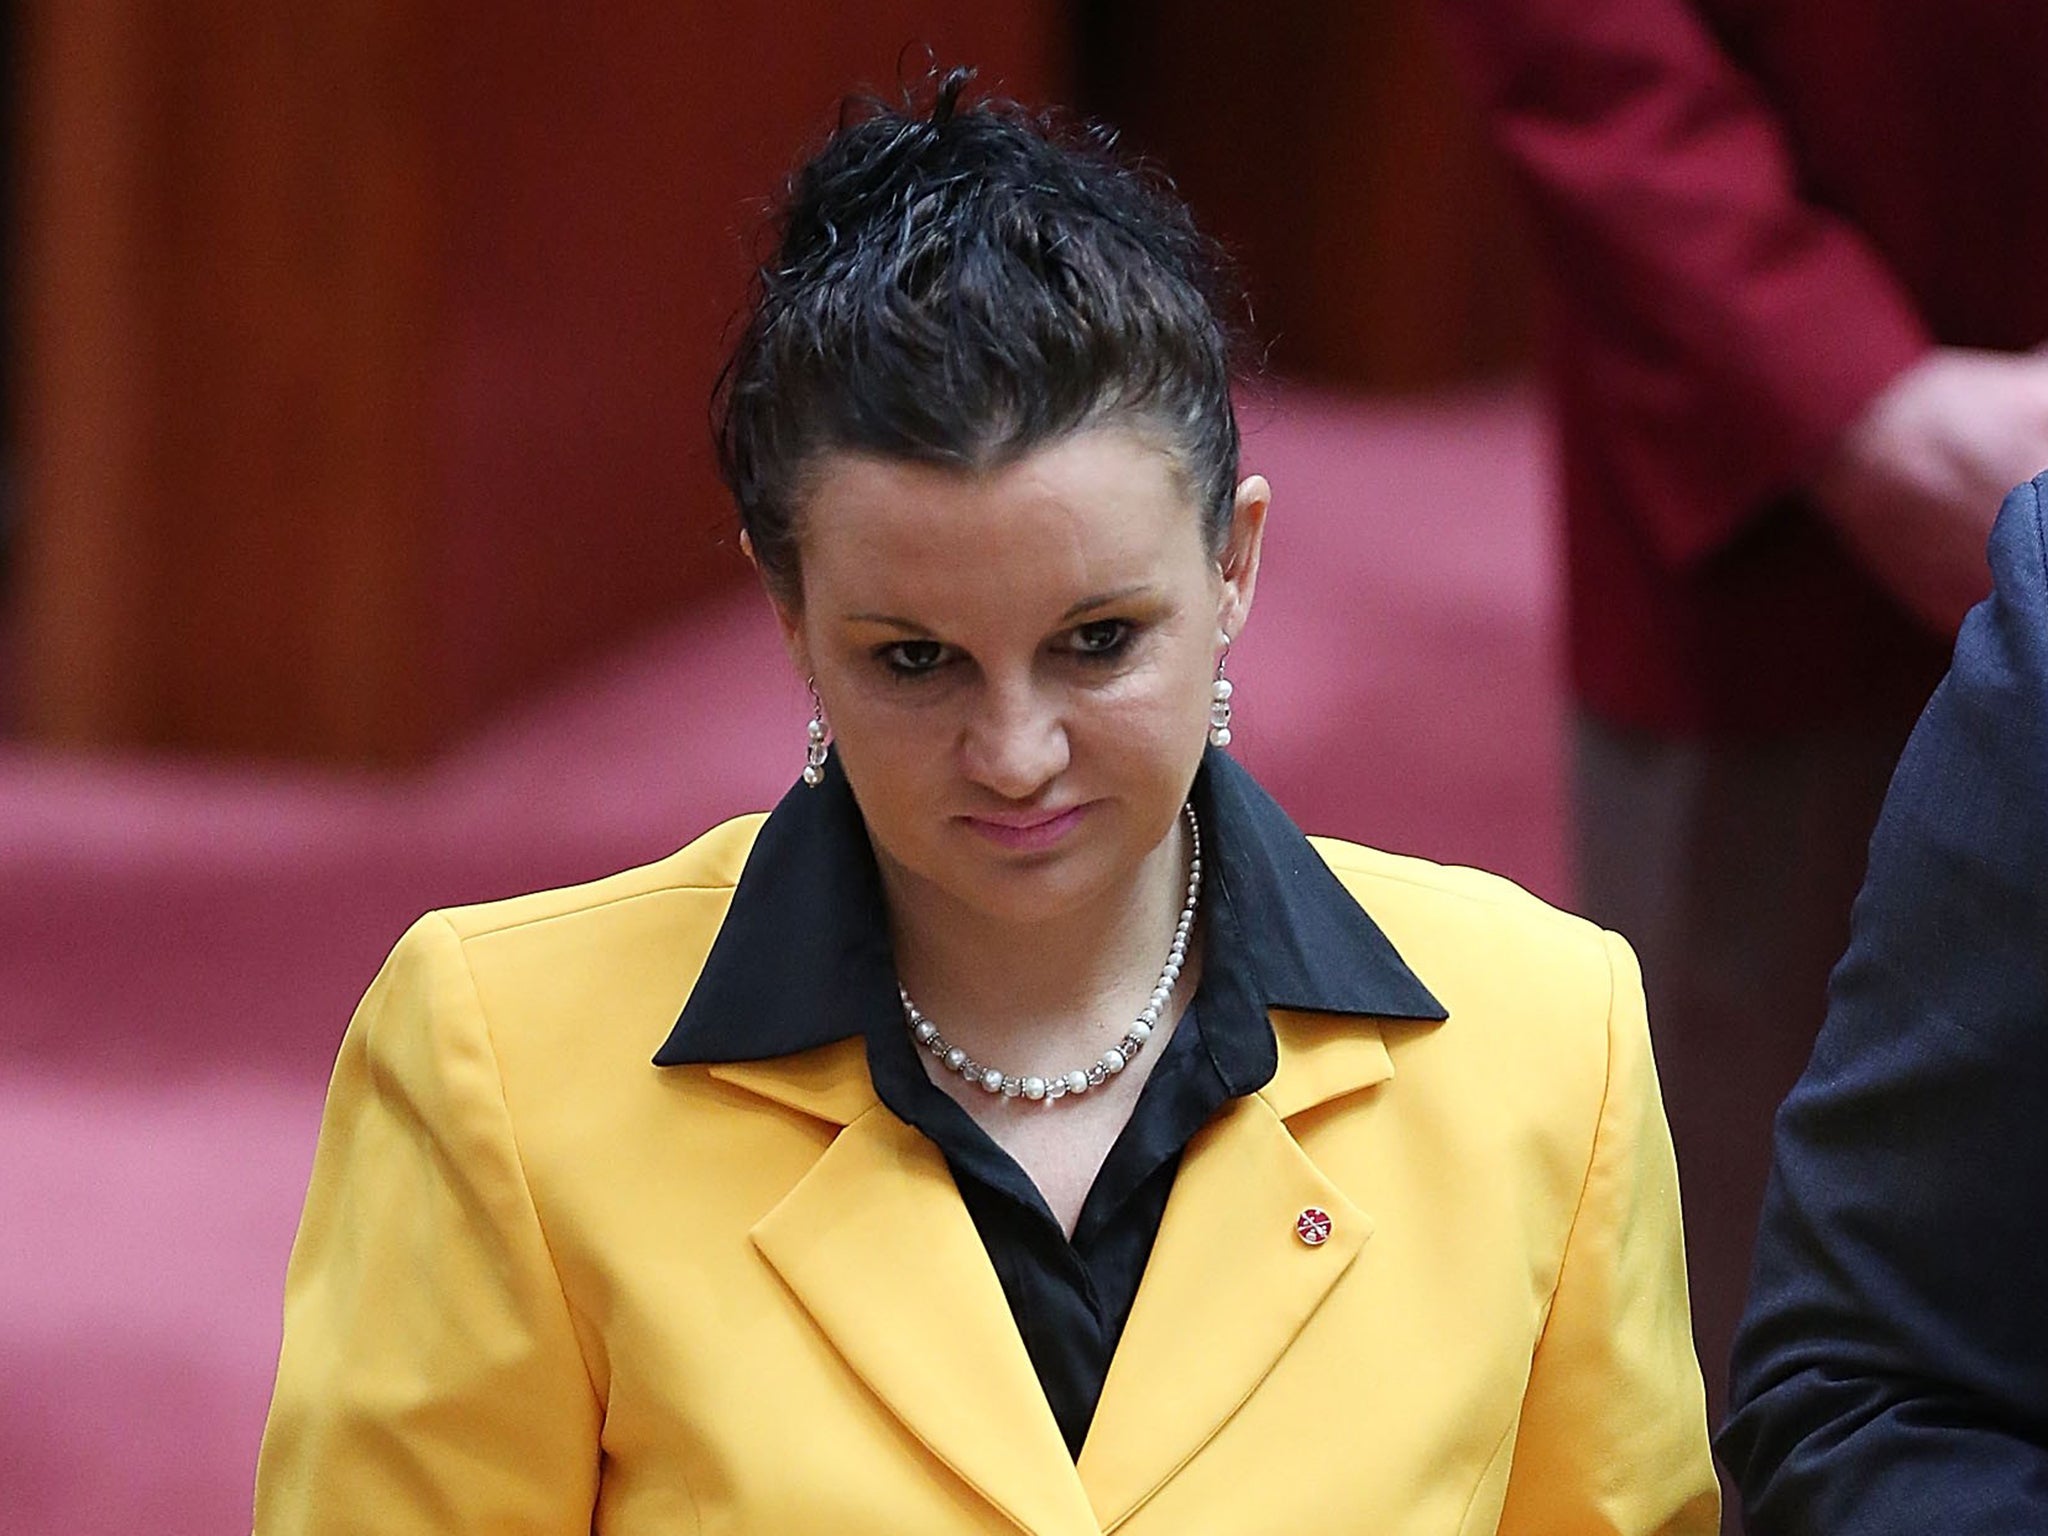 Senator for Tasmania Jacqui Lambie, who has been dubbed the Sarah Palin of Australia